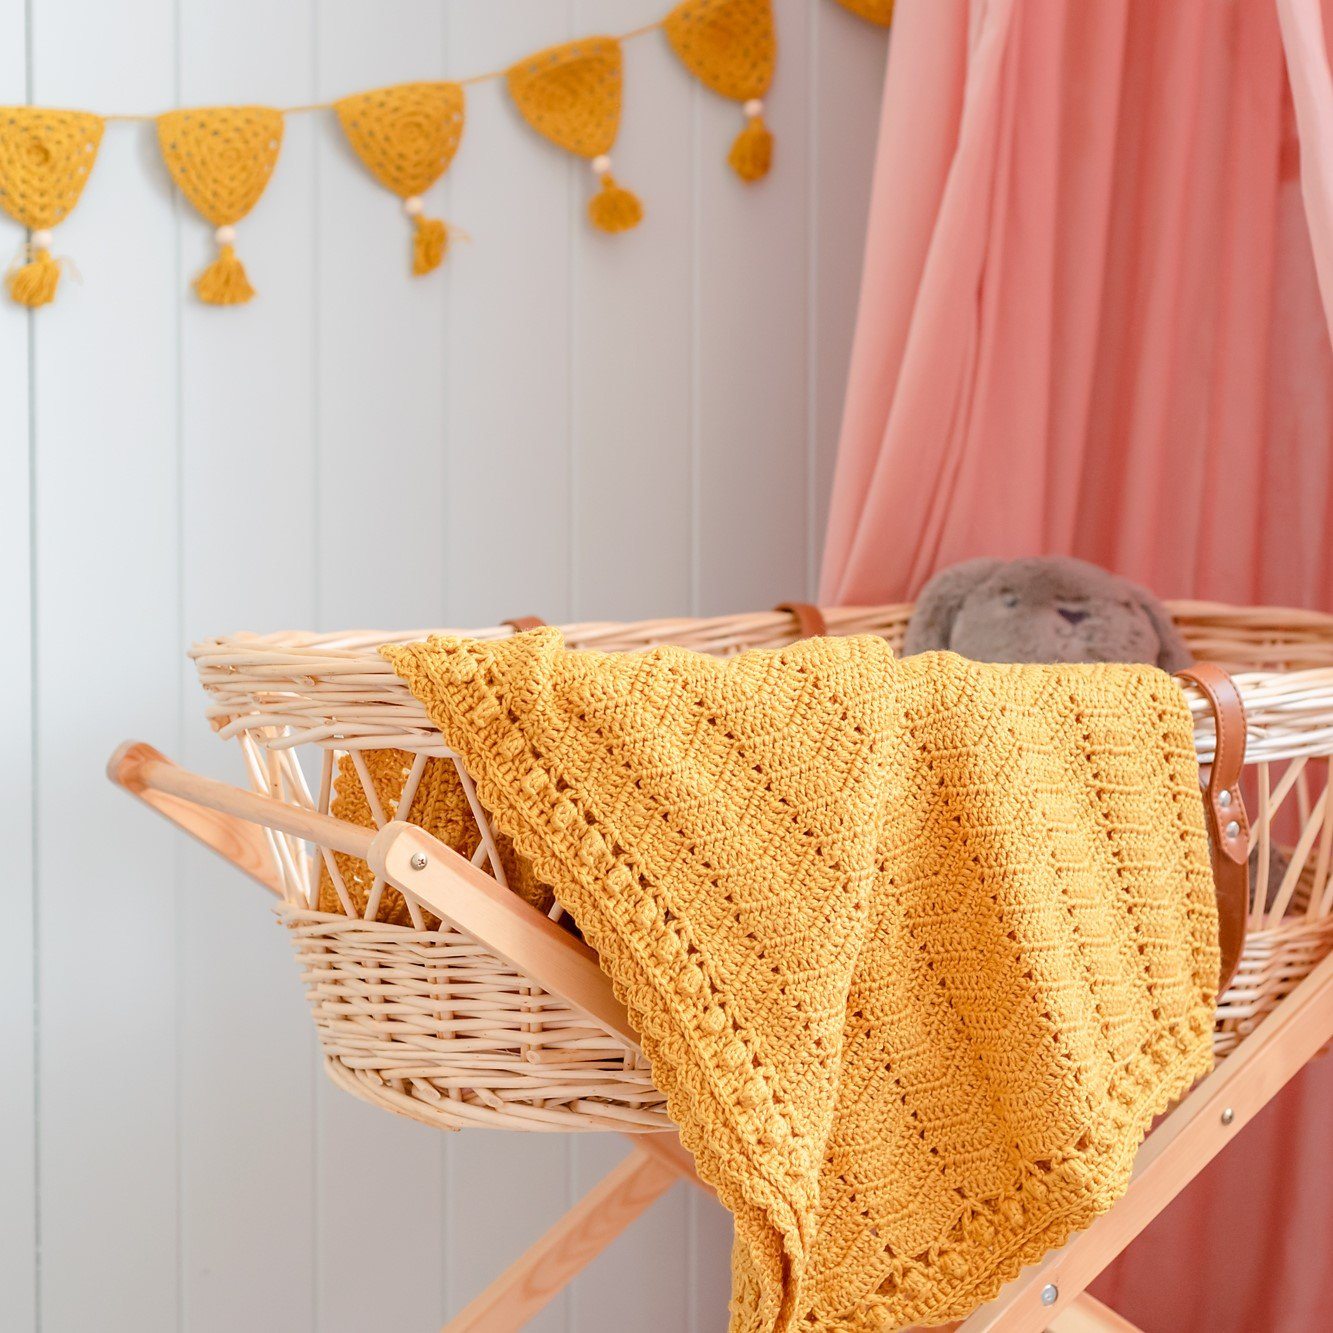 O.B Design | Crocheted Baby Blanket - Cinnamon